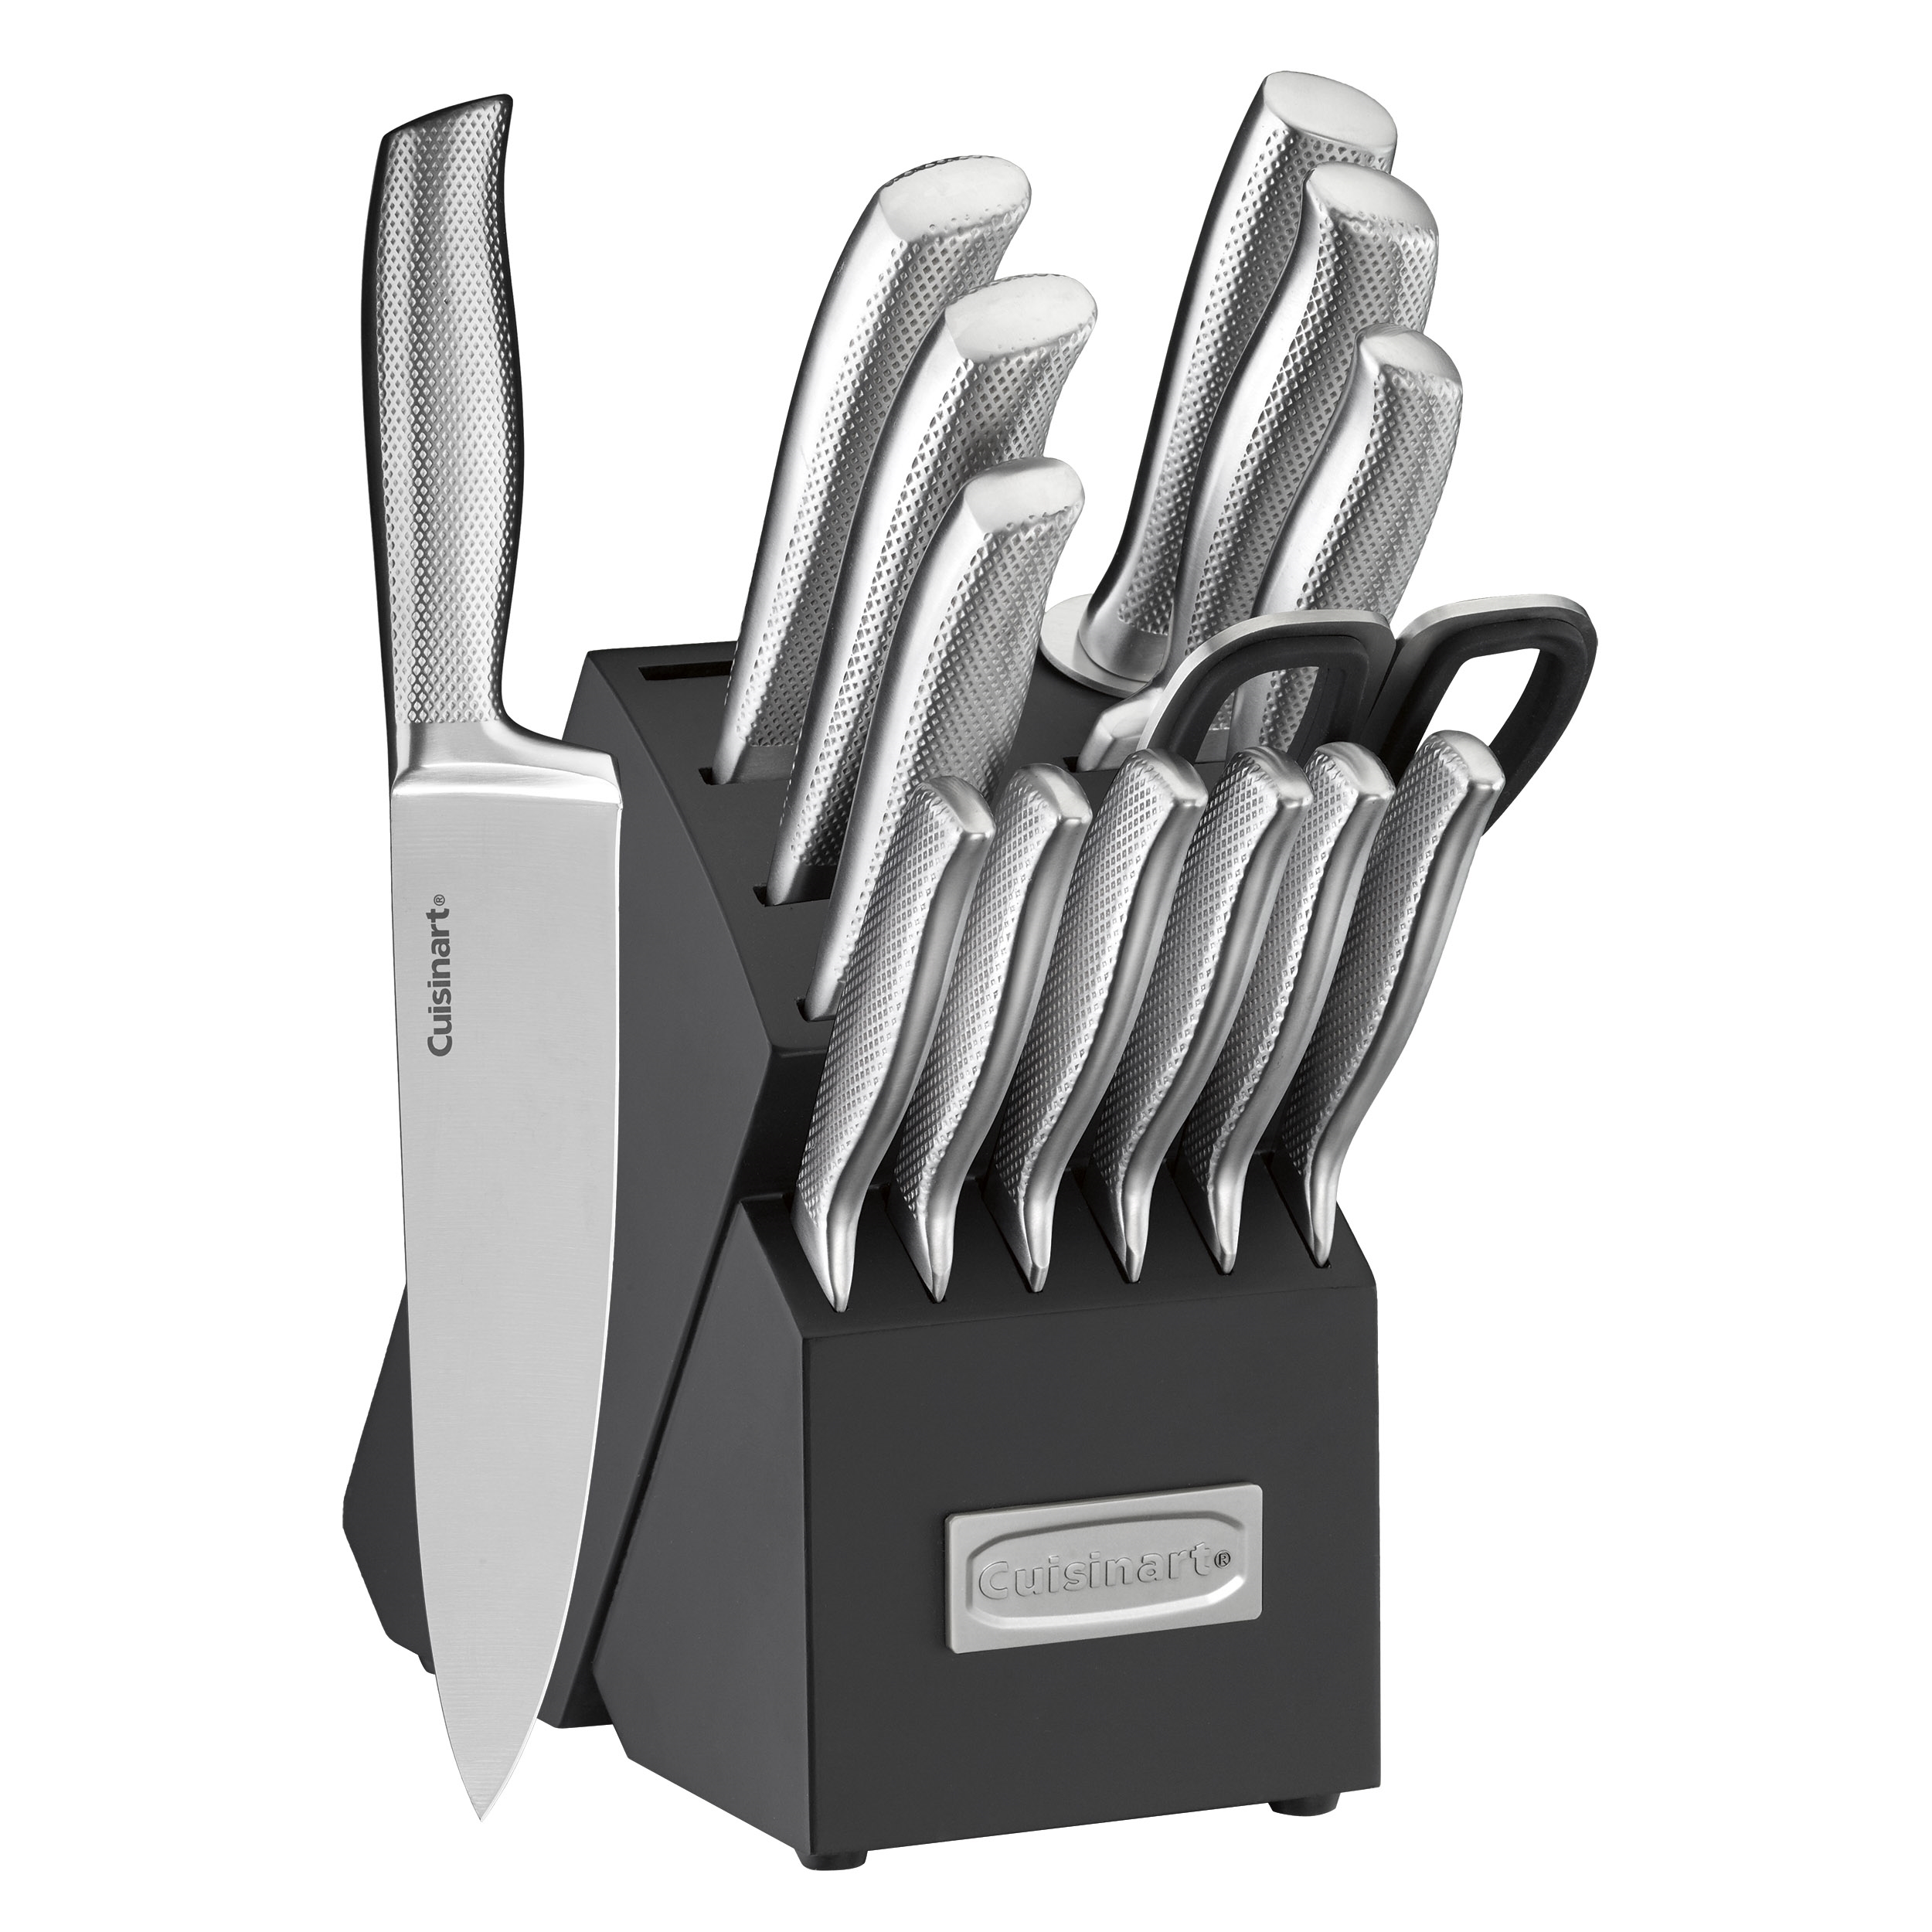 15pc German Stainless Steel Hollow Handle Cutlery Block Set